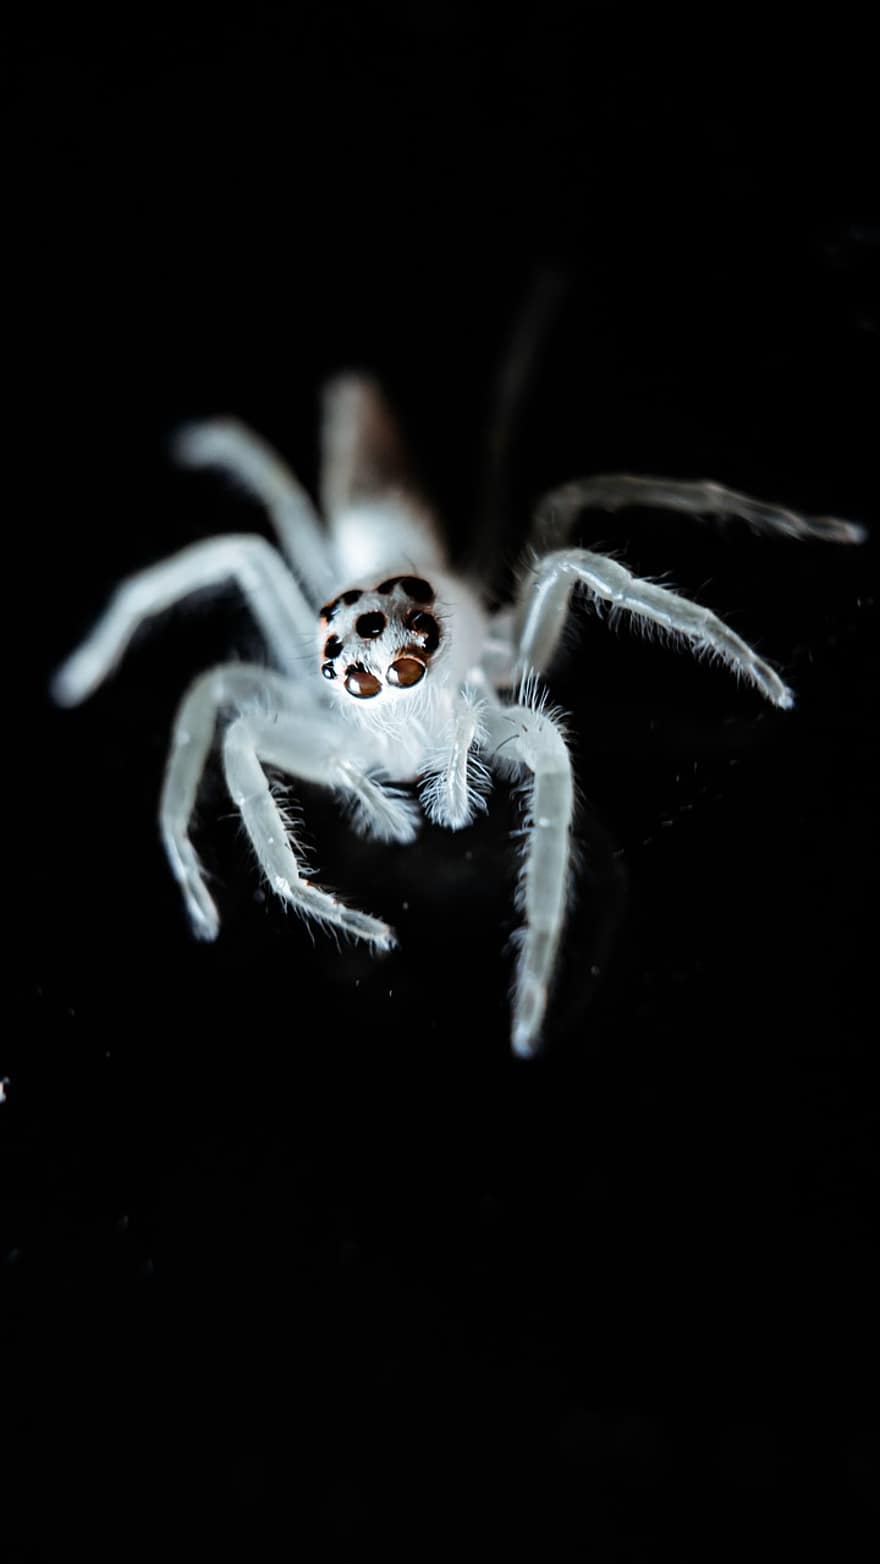 melompat laba-laba, laba-laba, serangga, arthropoda, Tarantula, makro